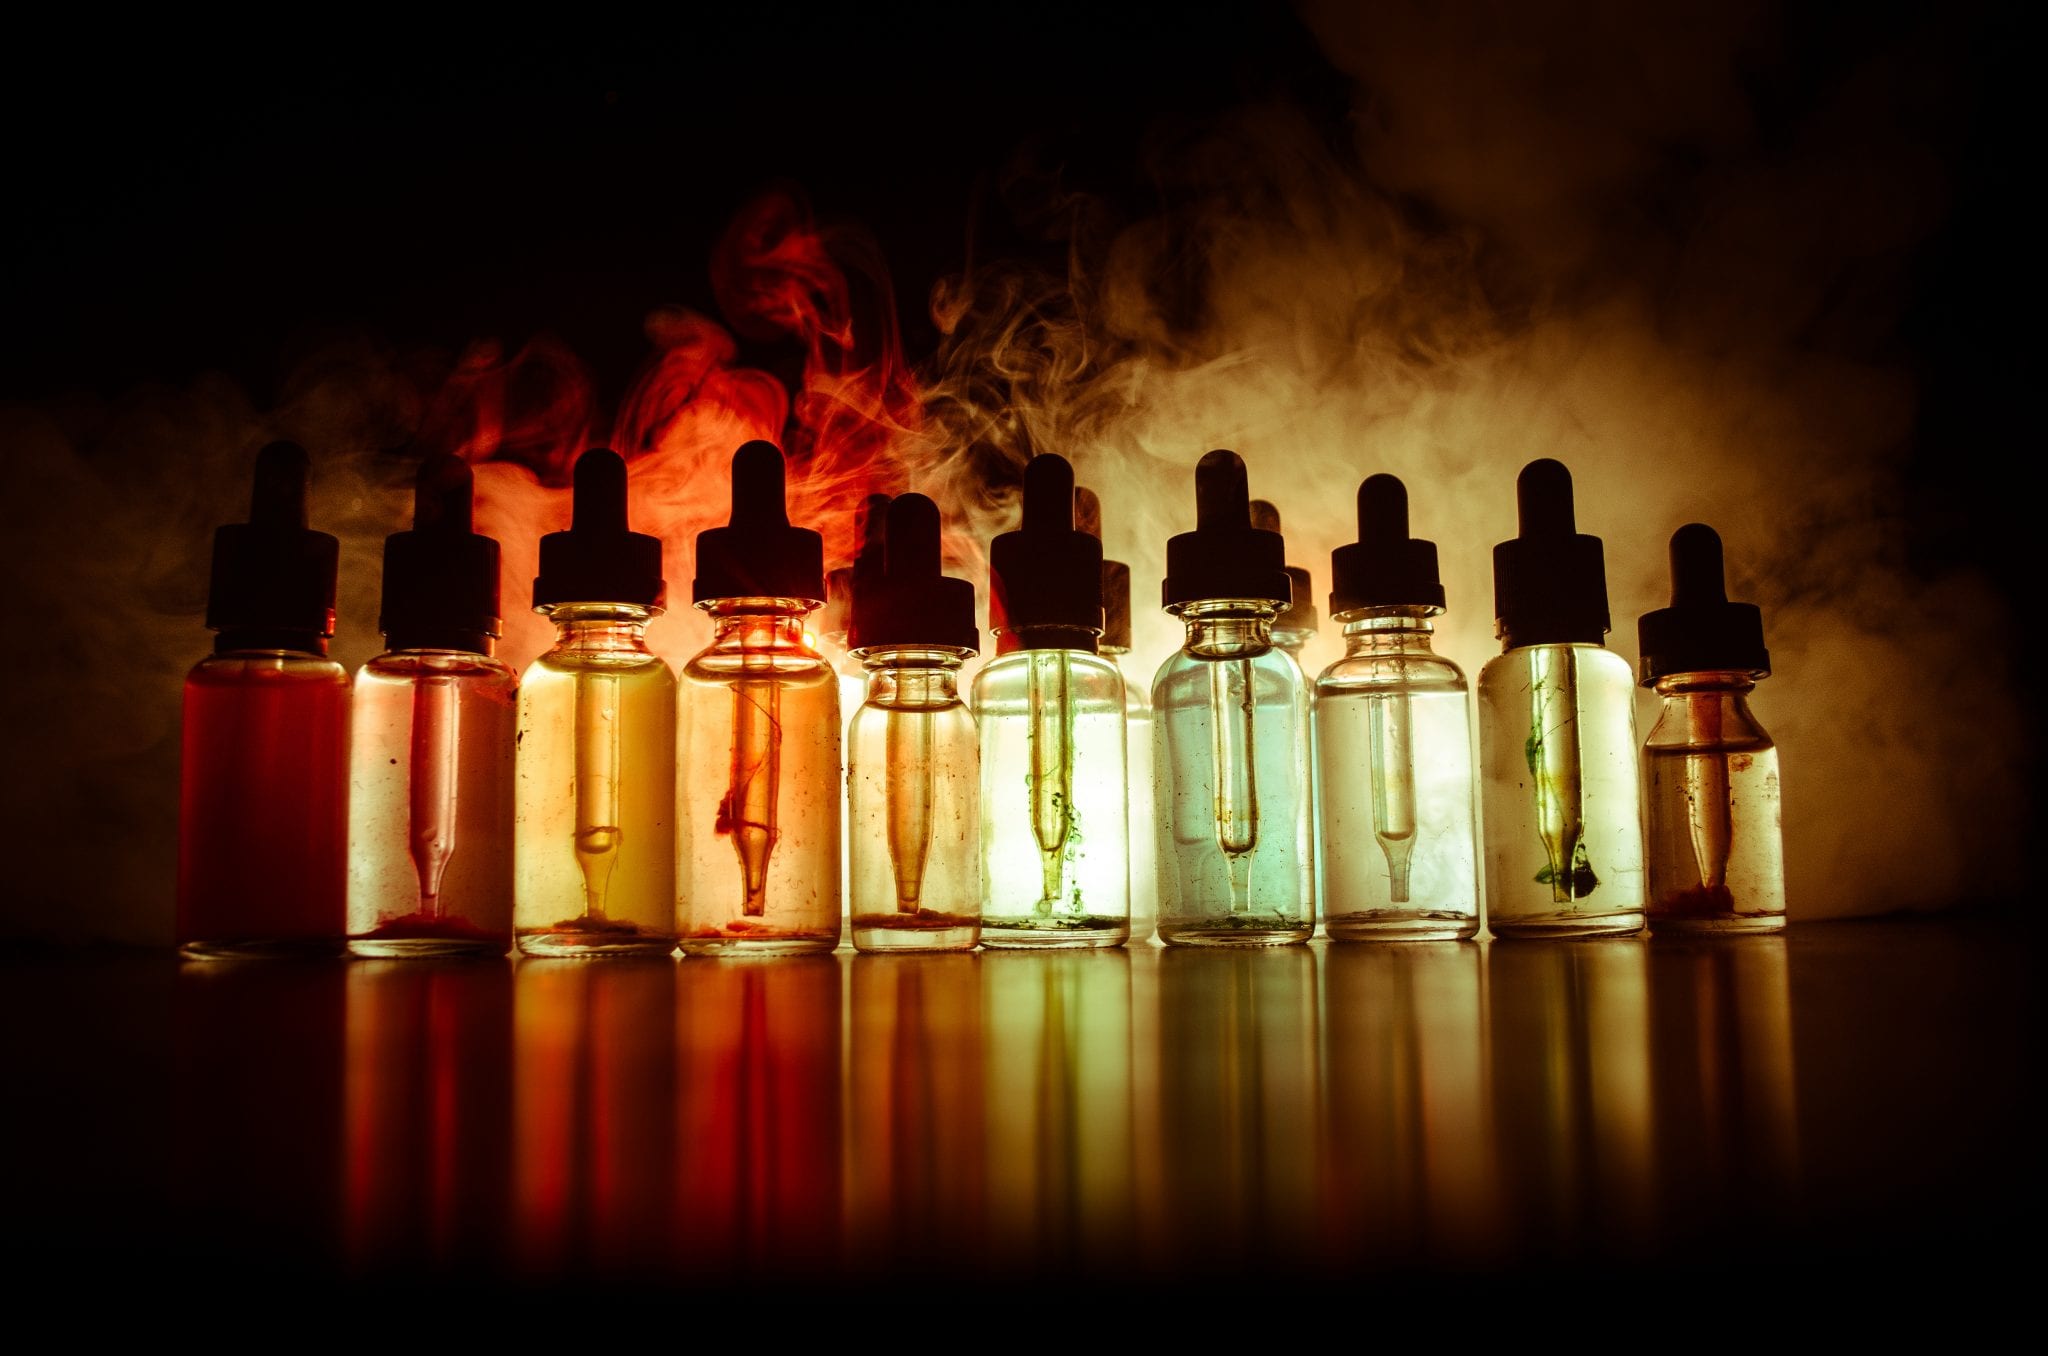 Vape concept. Smoke clouds and vape liquid bottles on dark background. Light effects. Useful as background or vape advertisement or vape background.